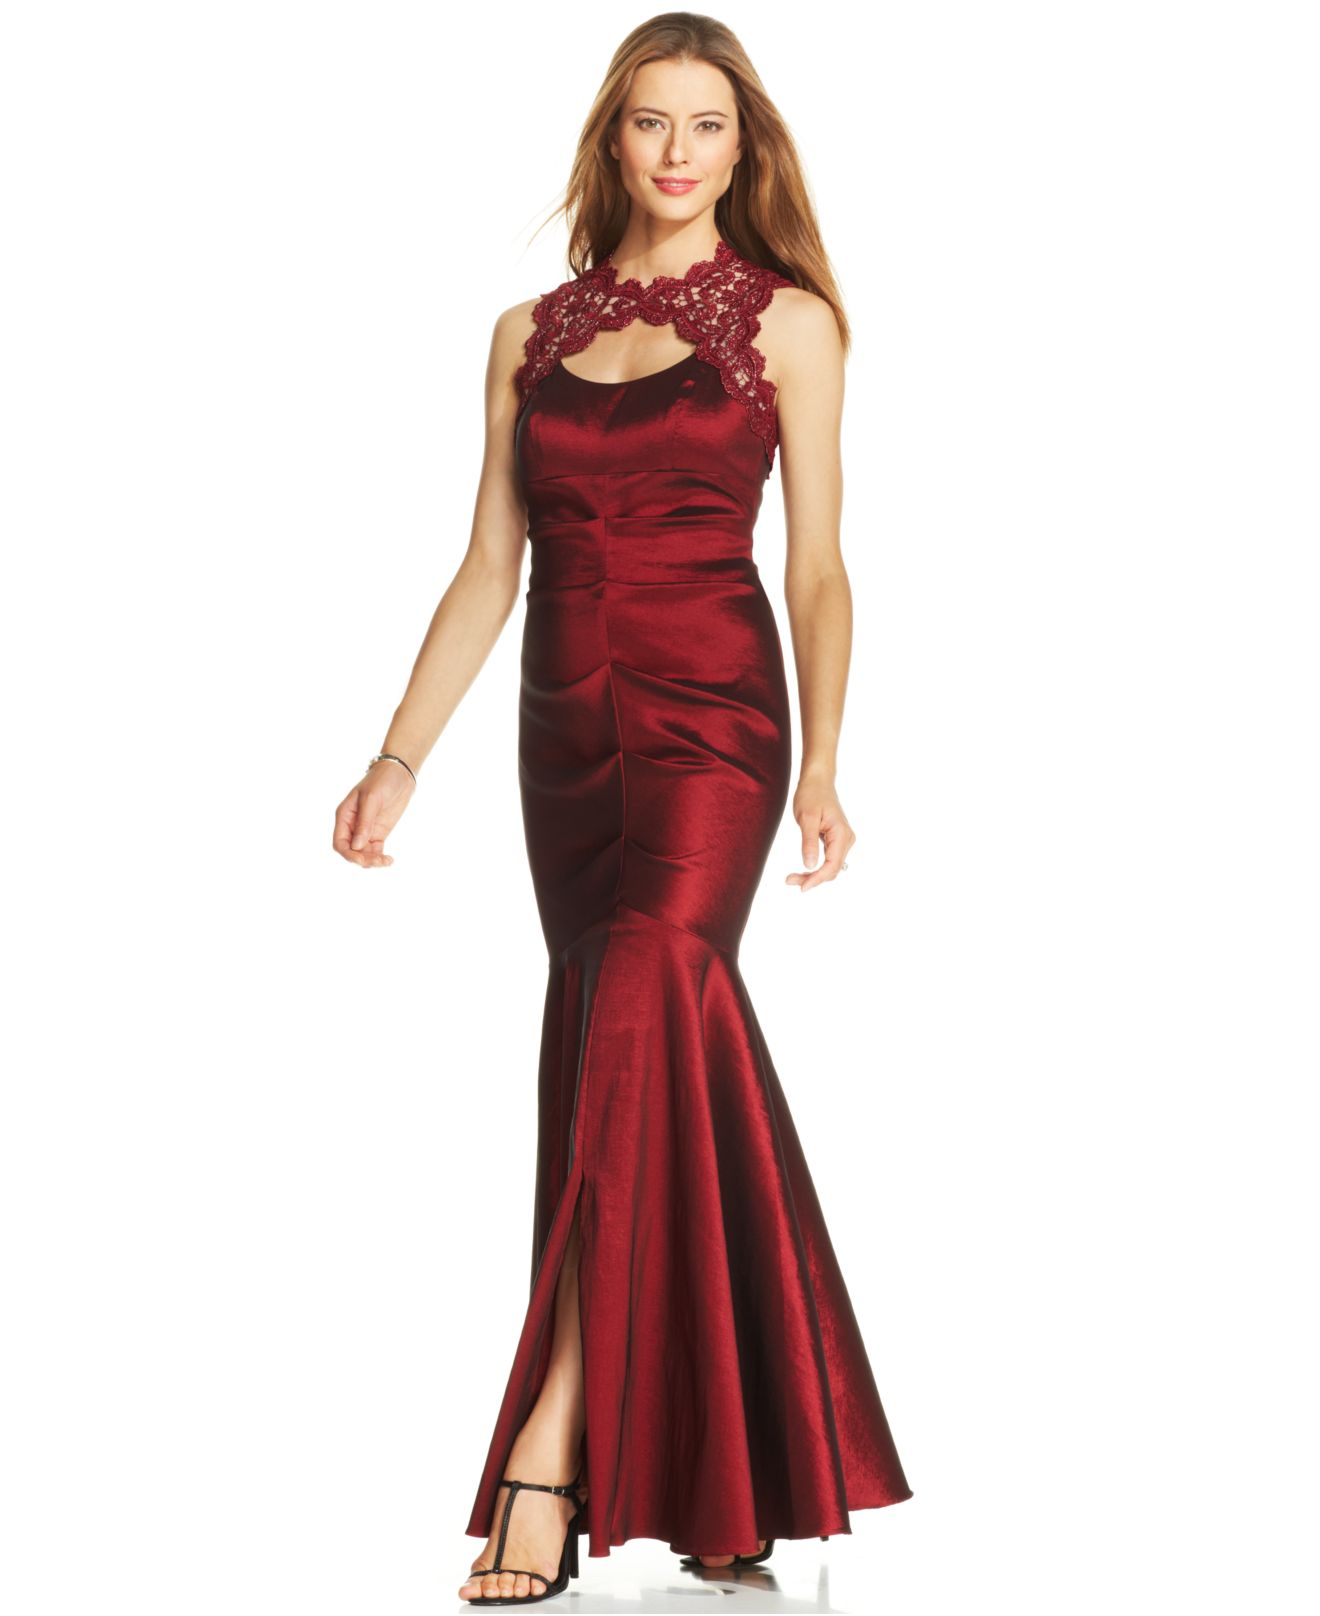 macy's red prom dresses